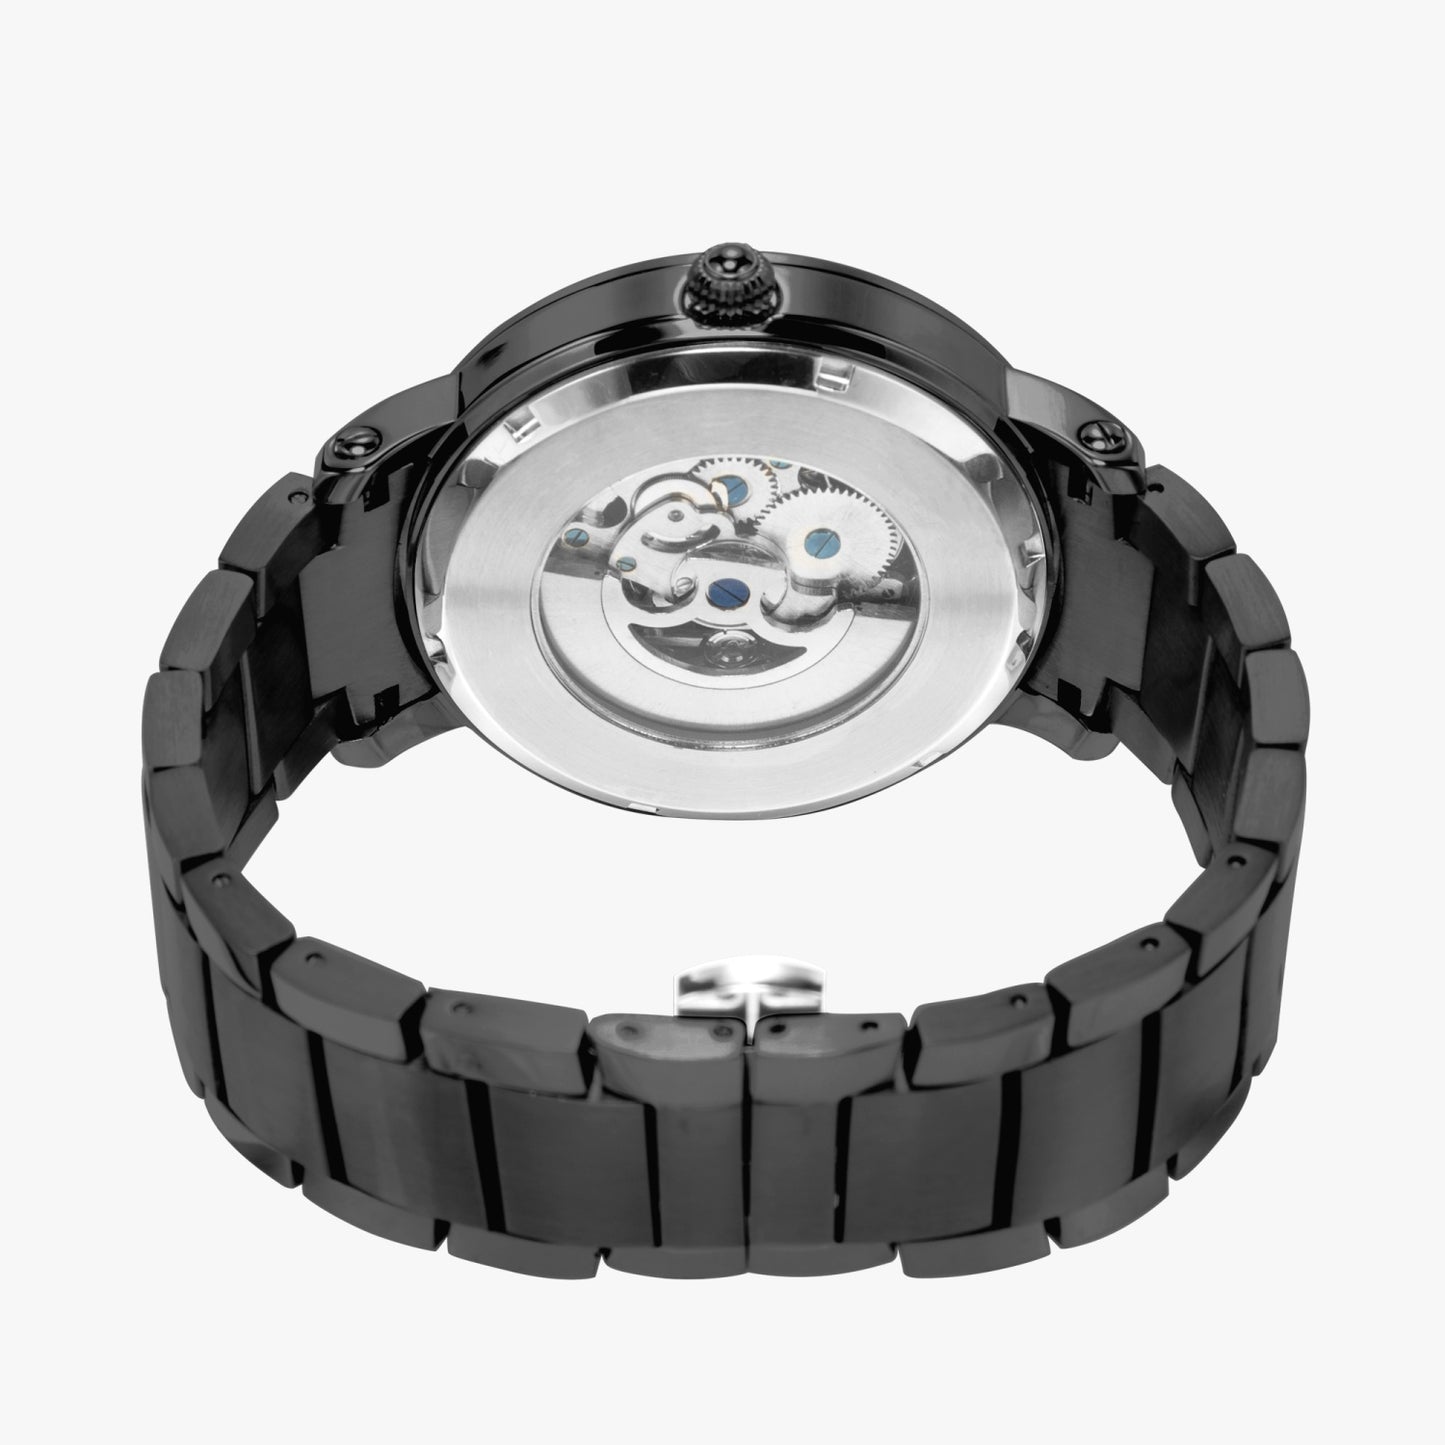 Torino Italia Automatic Movement Watch - Premium Stainless Steel